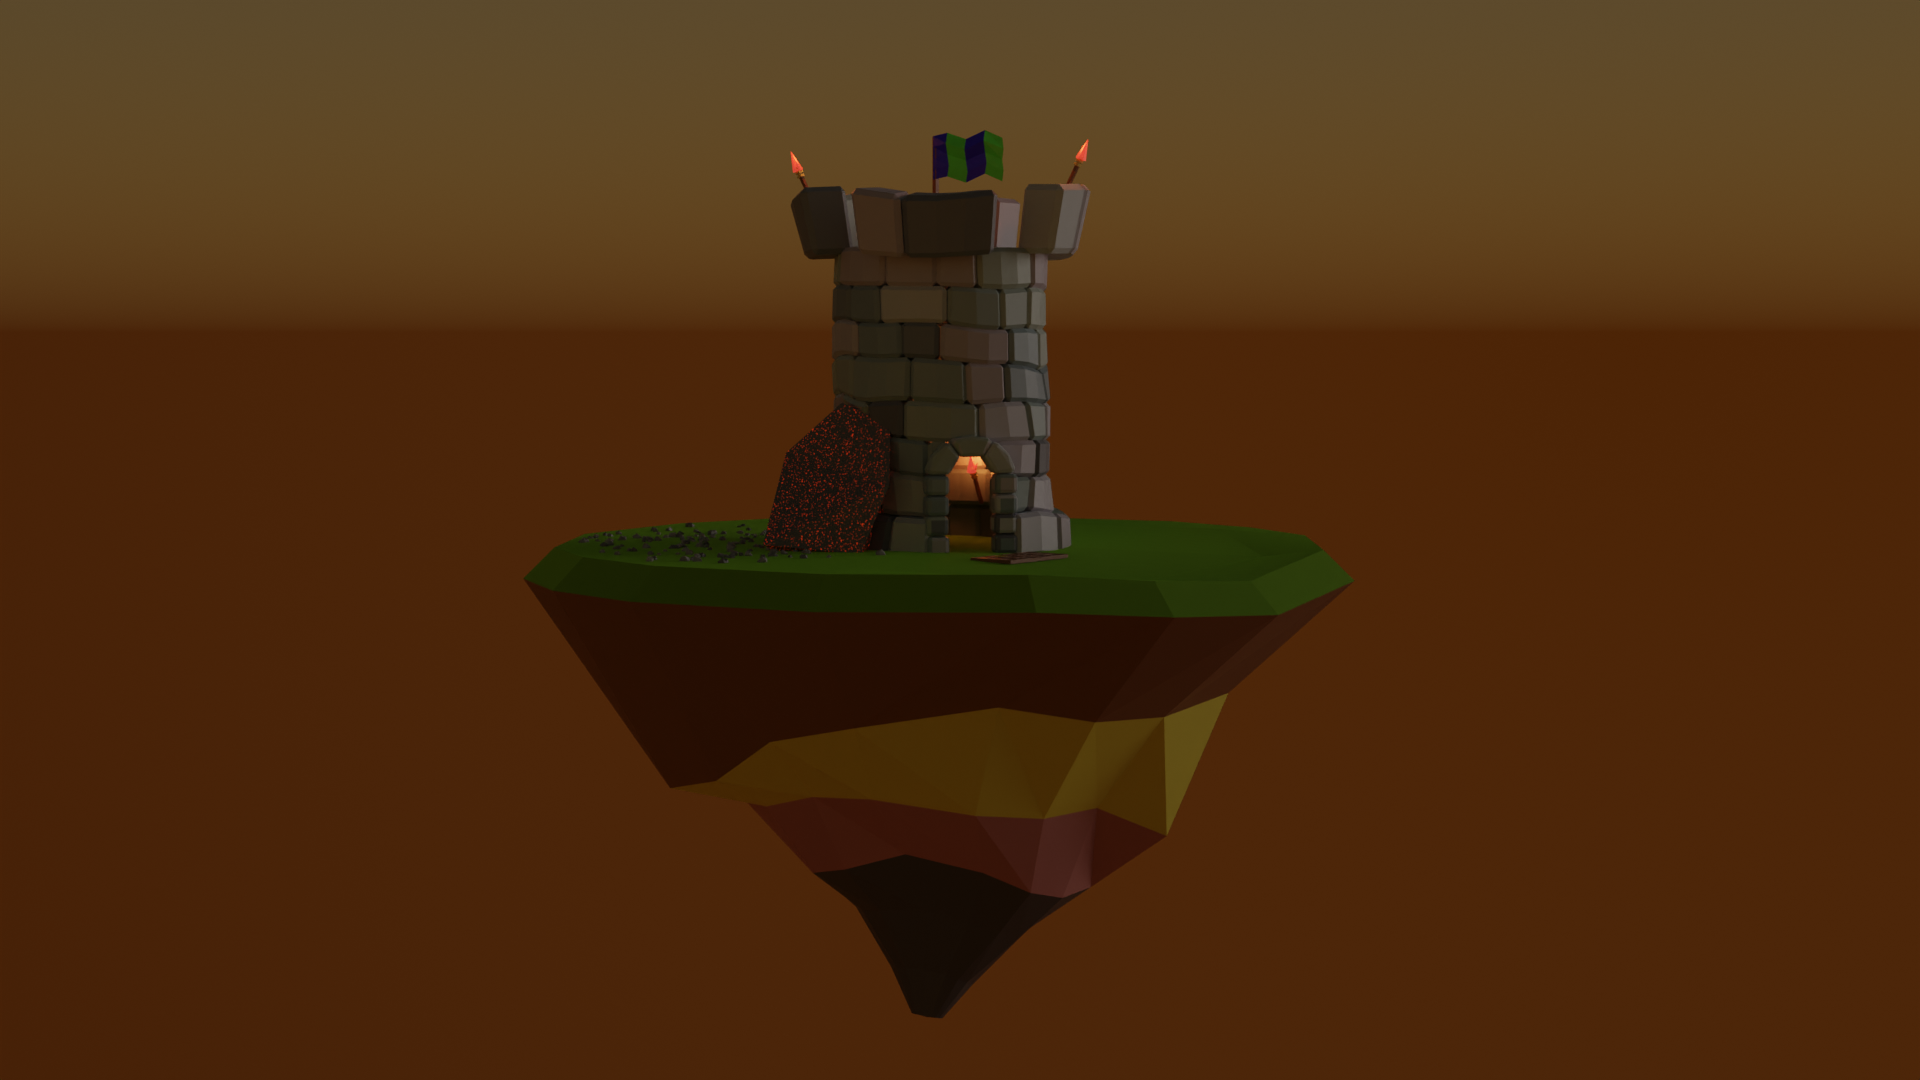 General 1920x1080 tower flag torches CGI digital art Blender medieval meteorite island relaxing brown background